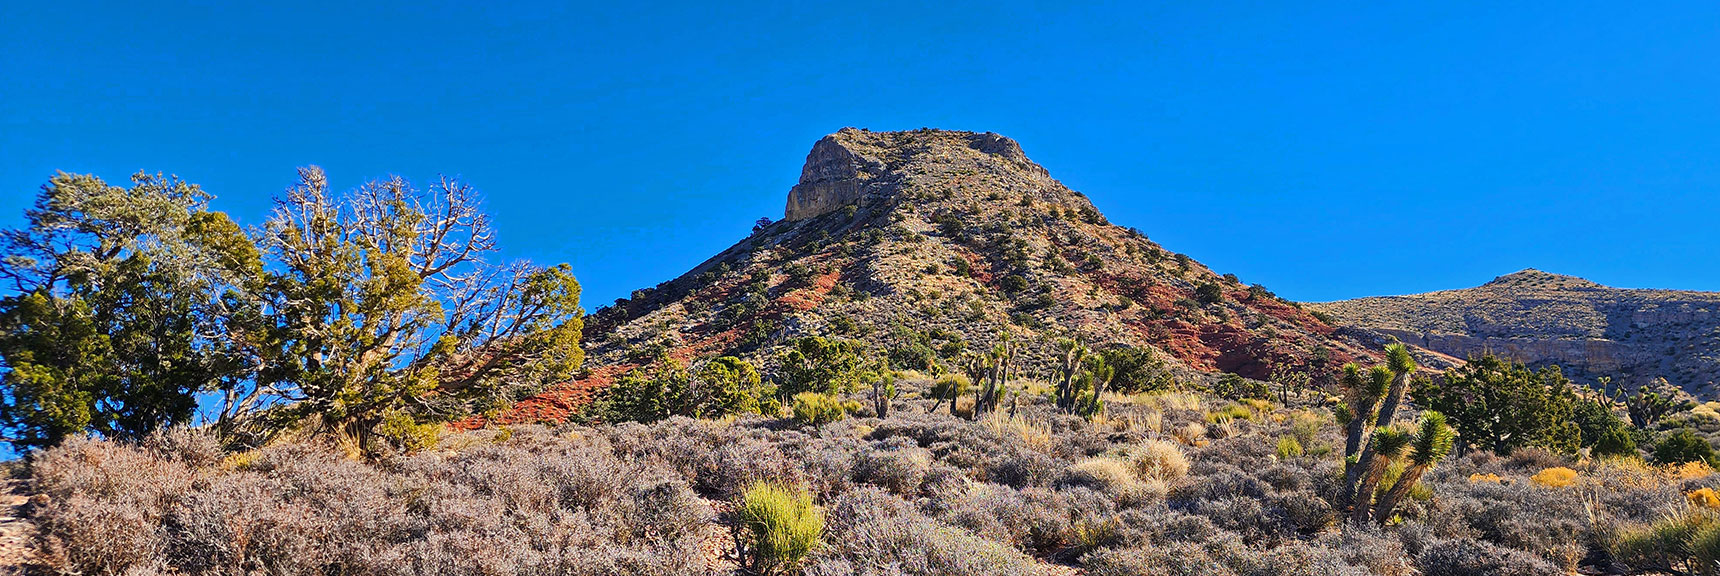 NW Corner of Landmark Bluff Summit Approach Ridge...Picture Perfect Desert Landscape. | Landmark Bluff Circuit | Lovell Canyon, Nevada